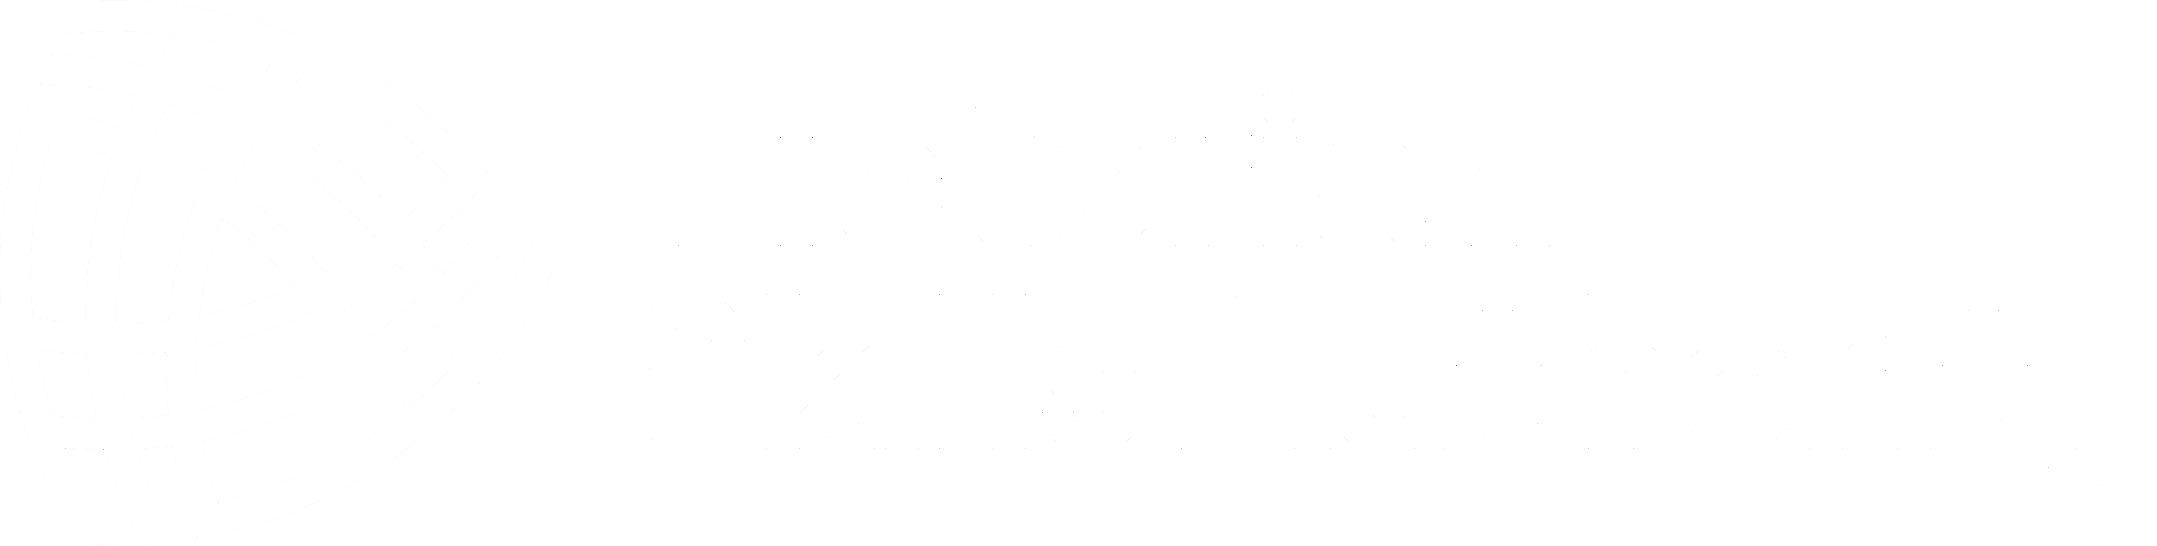 Victorian Skills Authority